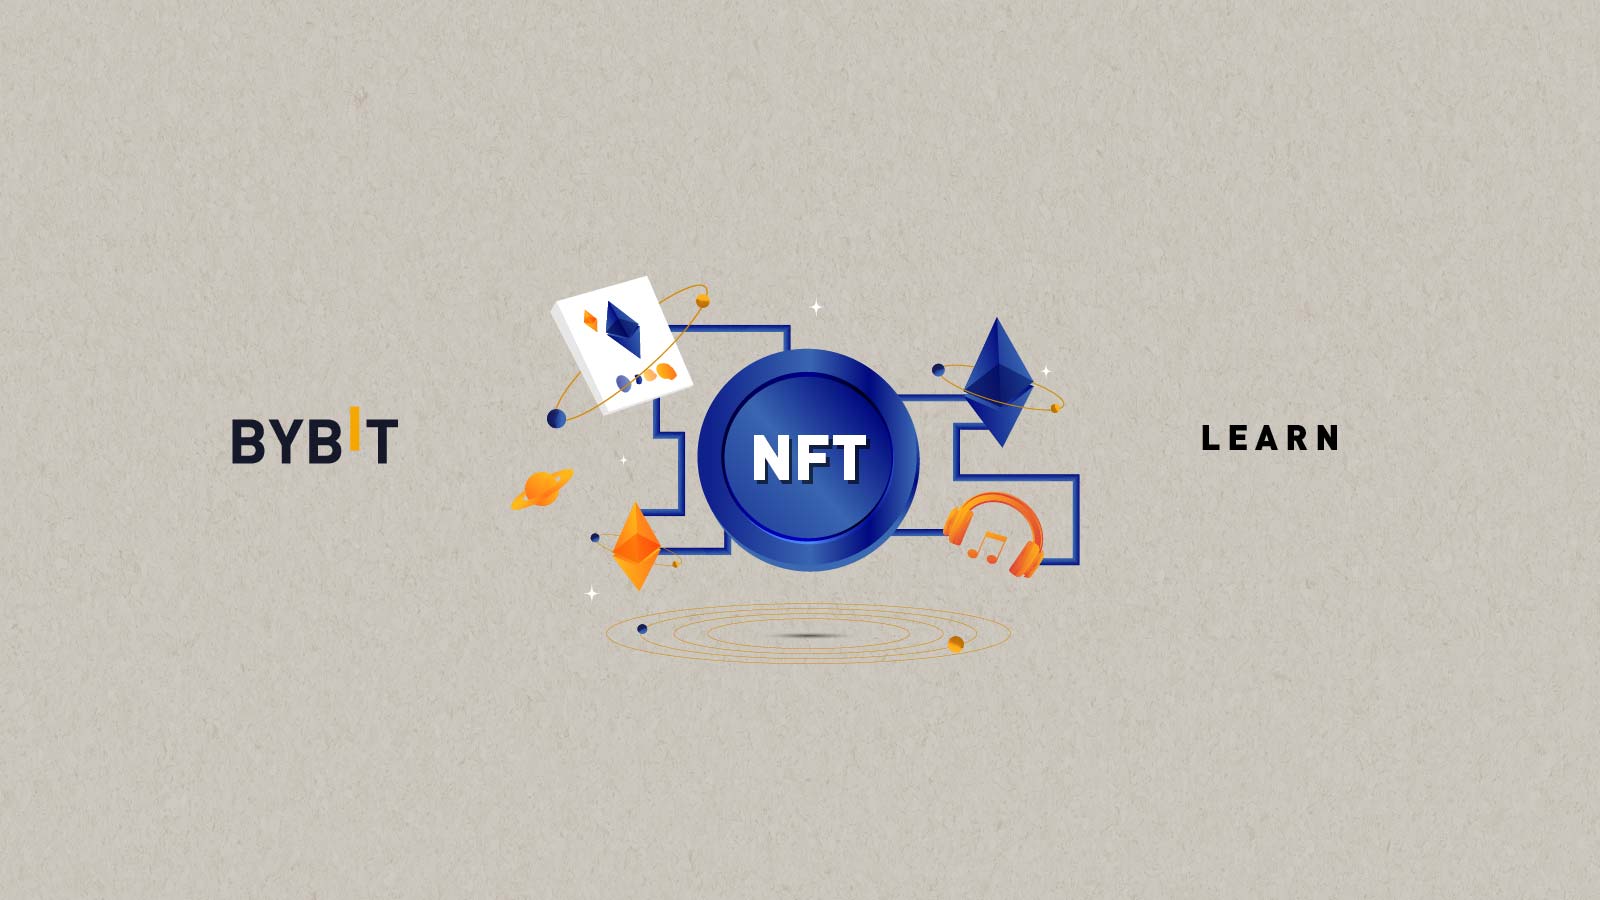 AI NFT Generator - AI NFT Maker to Create your NFT Art Collection